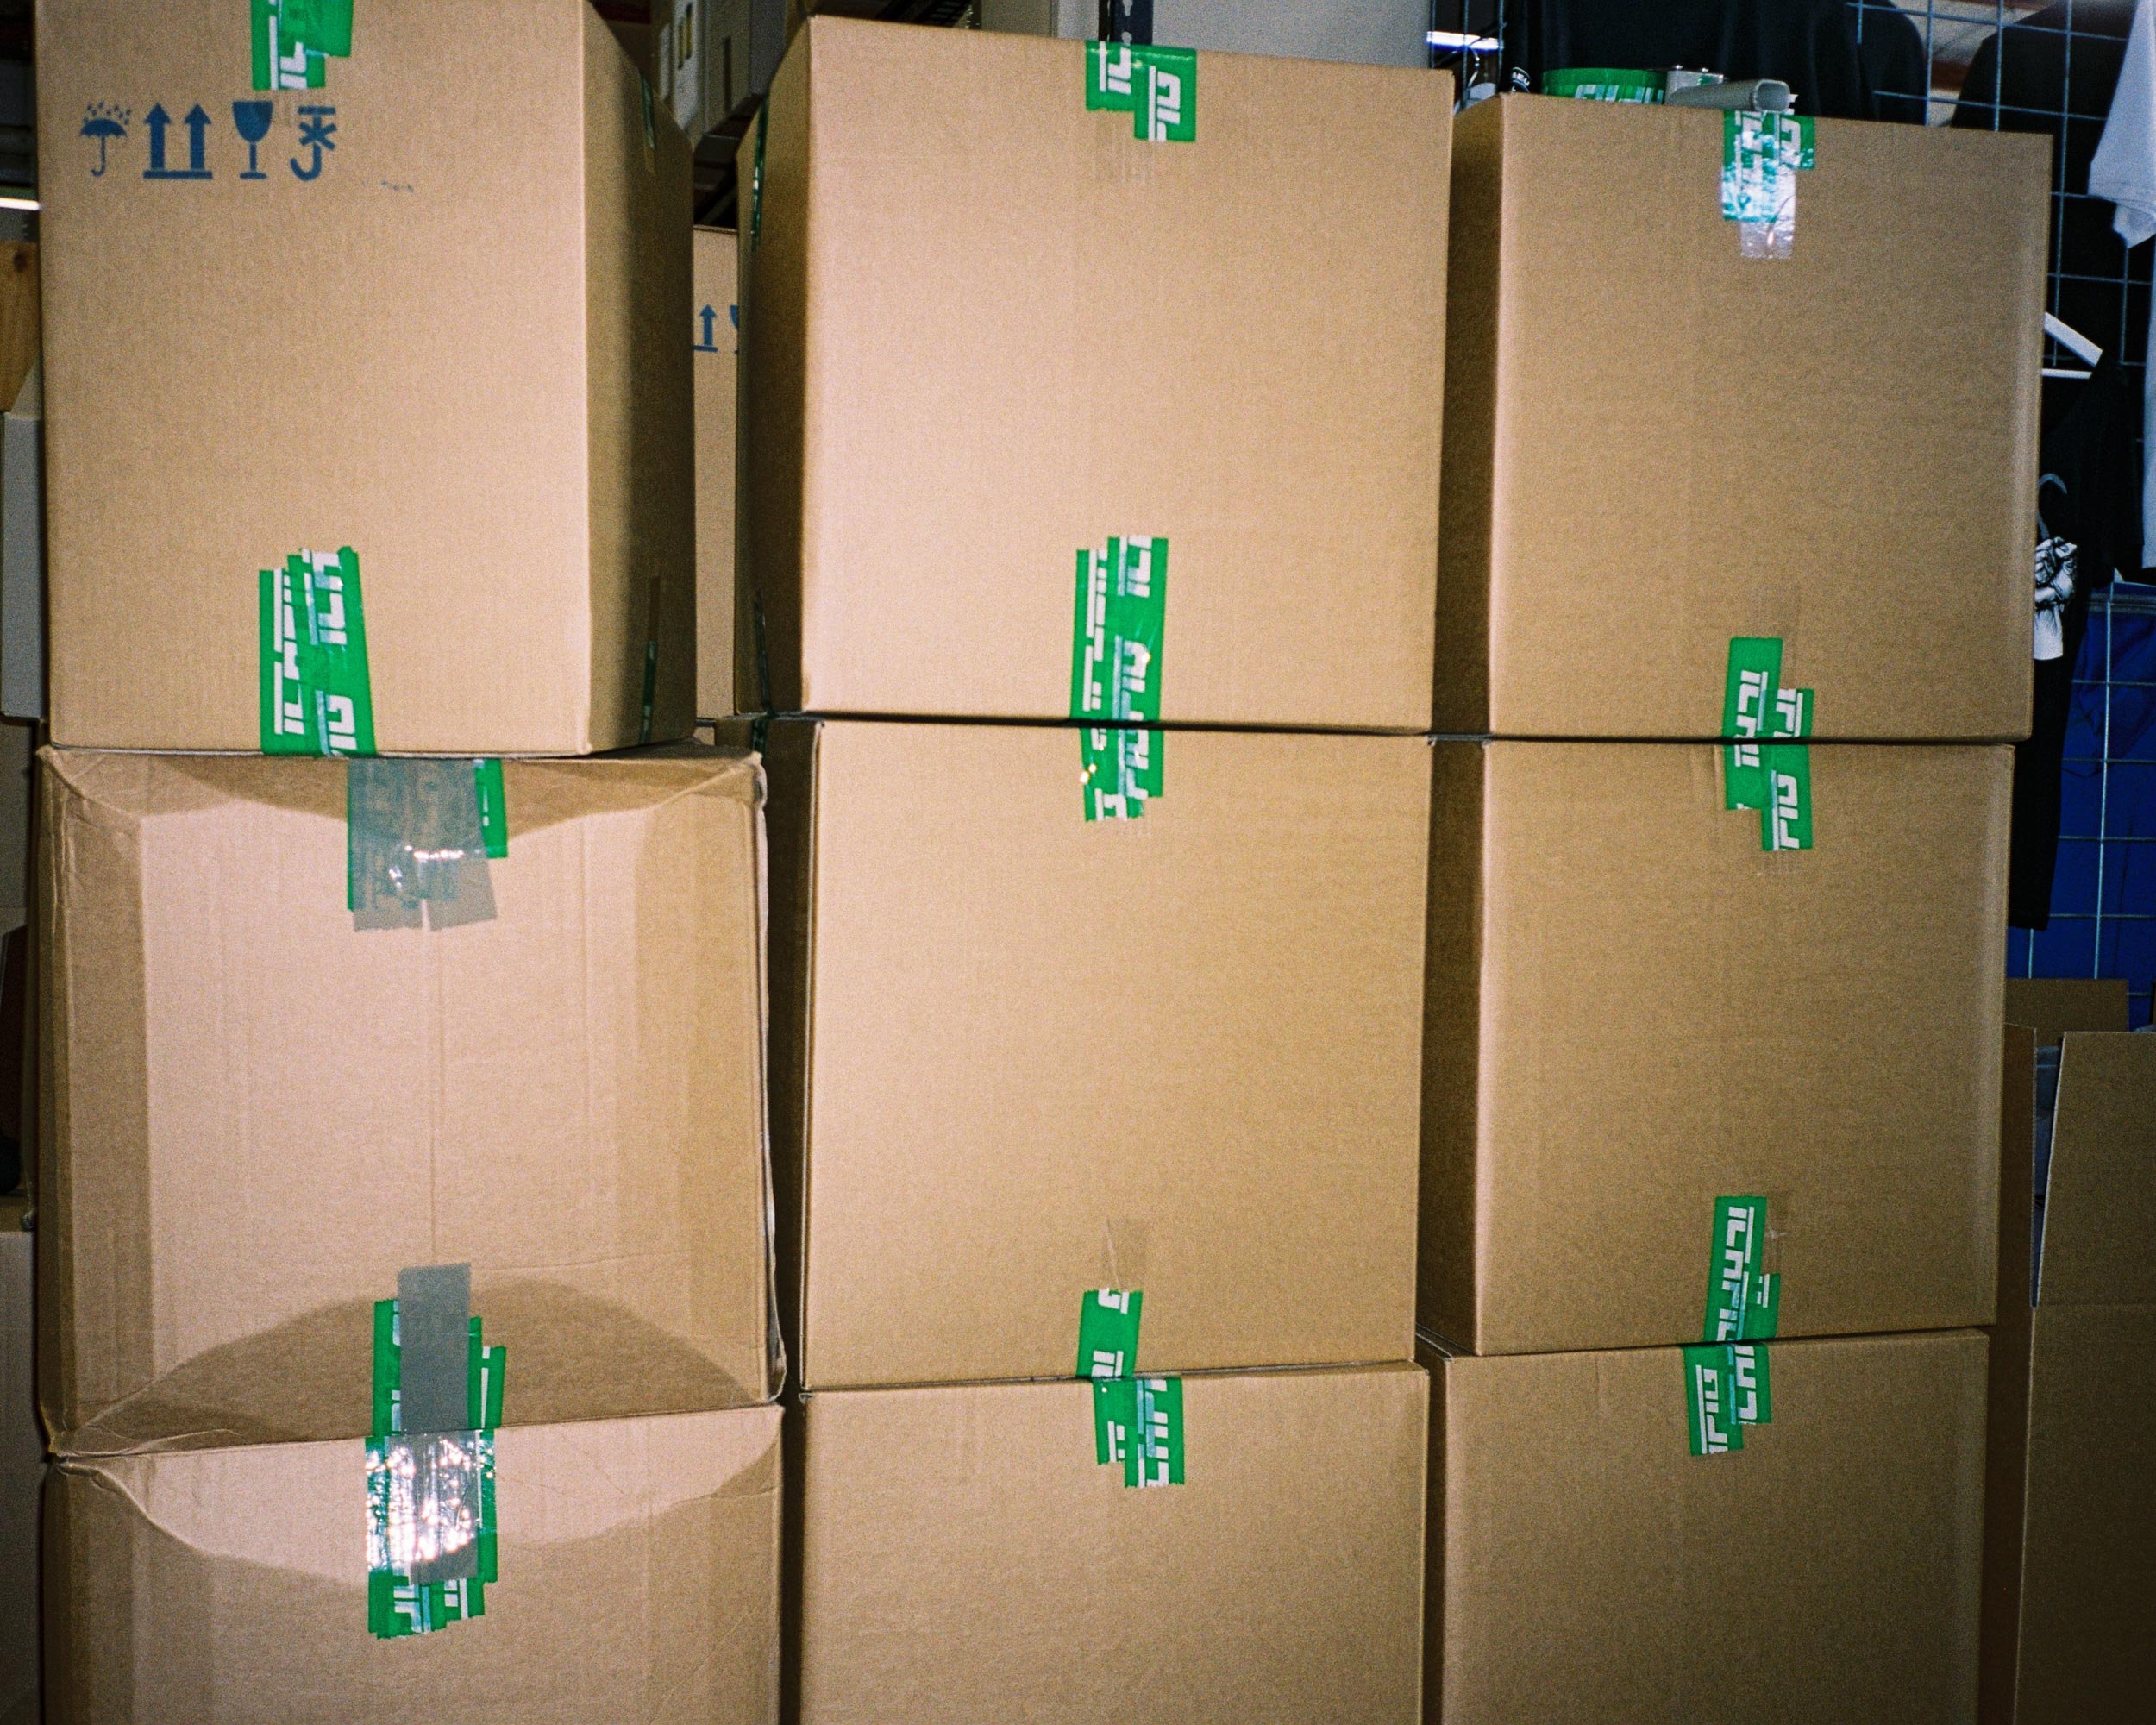 ICHPIG® boxes